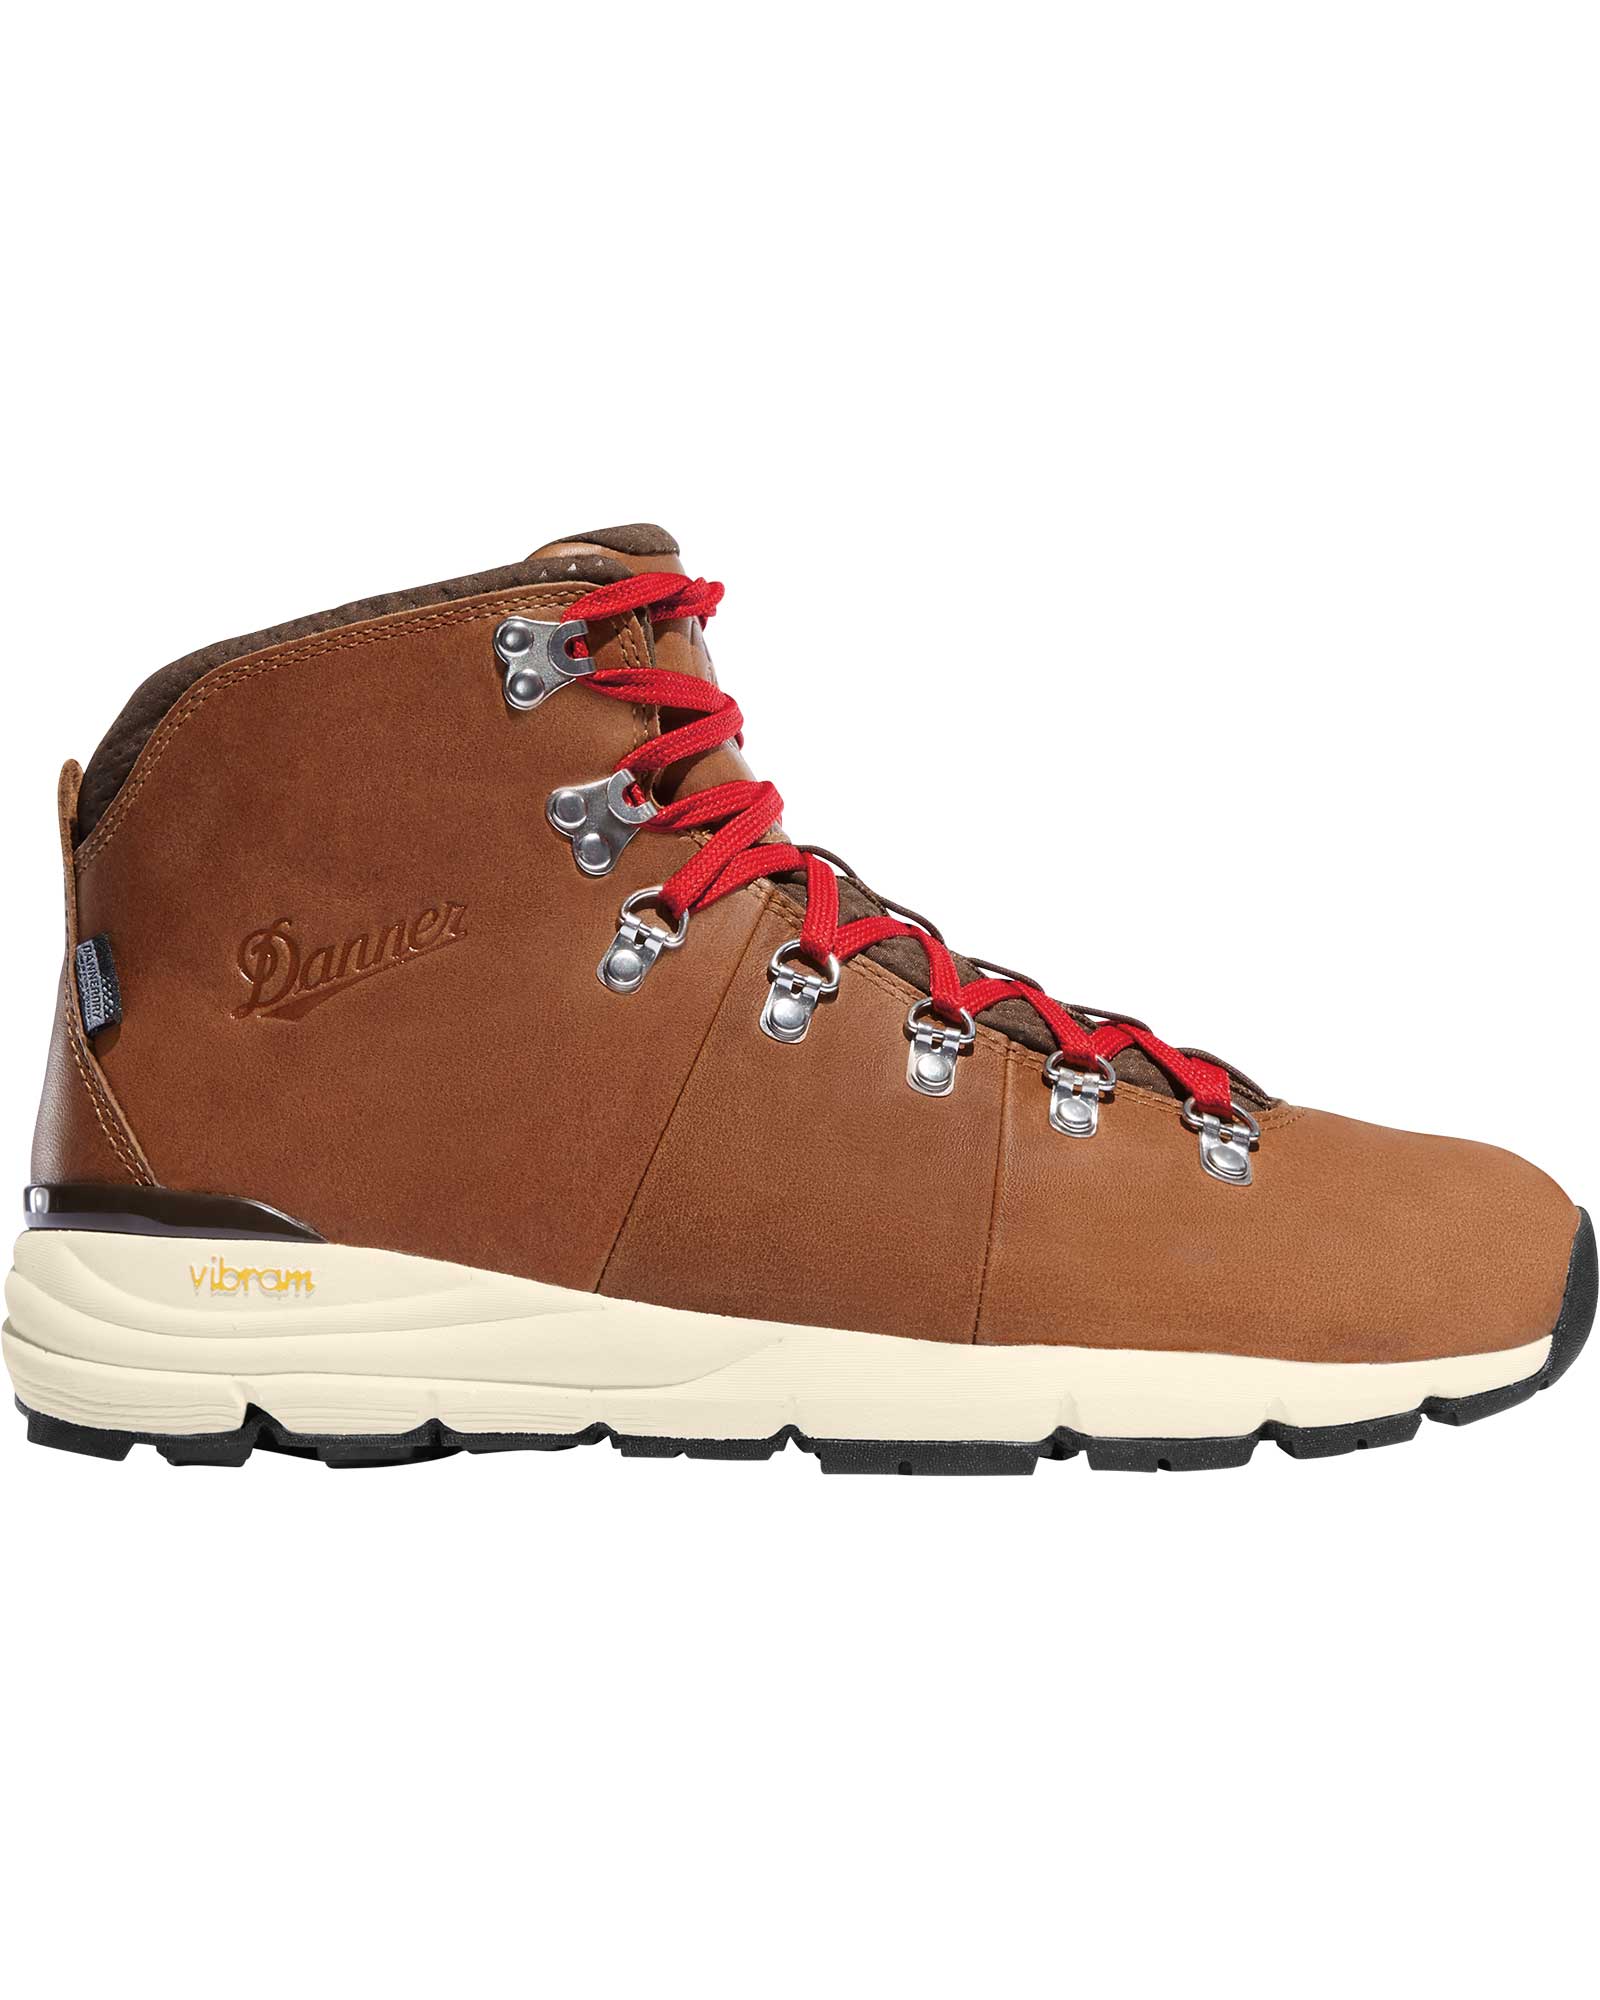 Danner Men’s Mountain 600 4.5" Boots - Saddle Tan UK 9